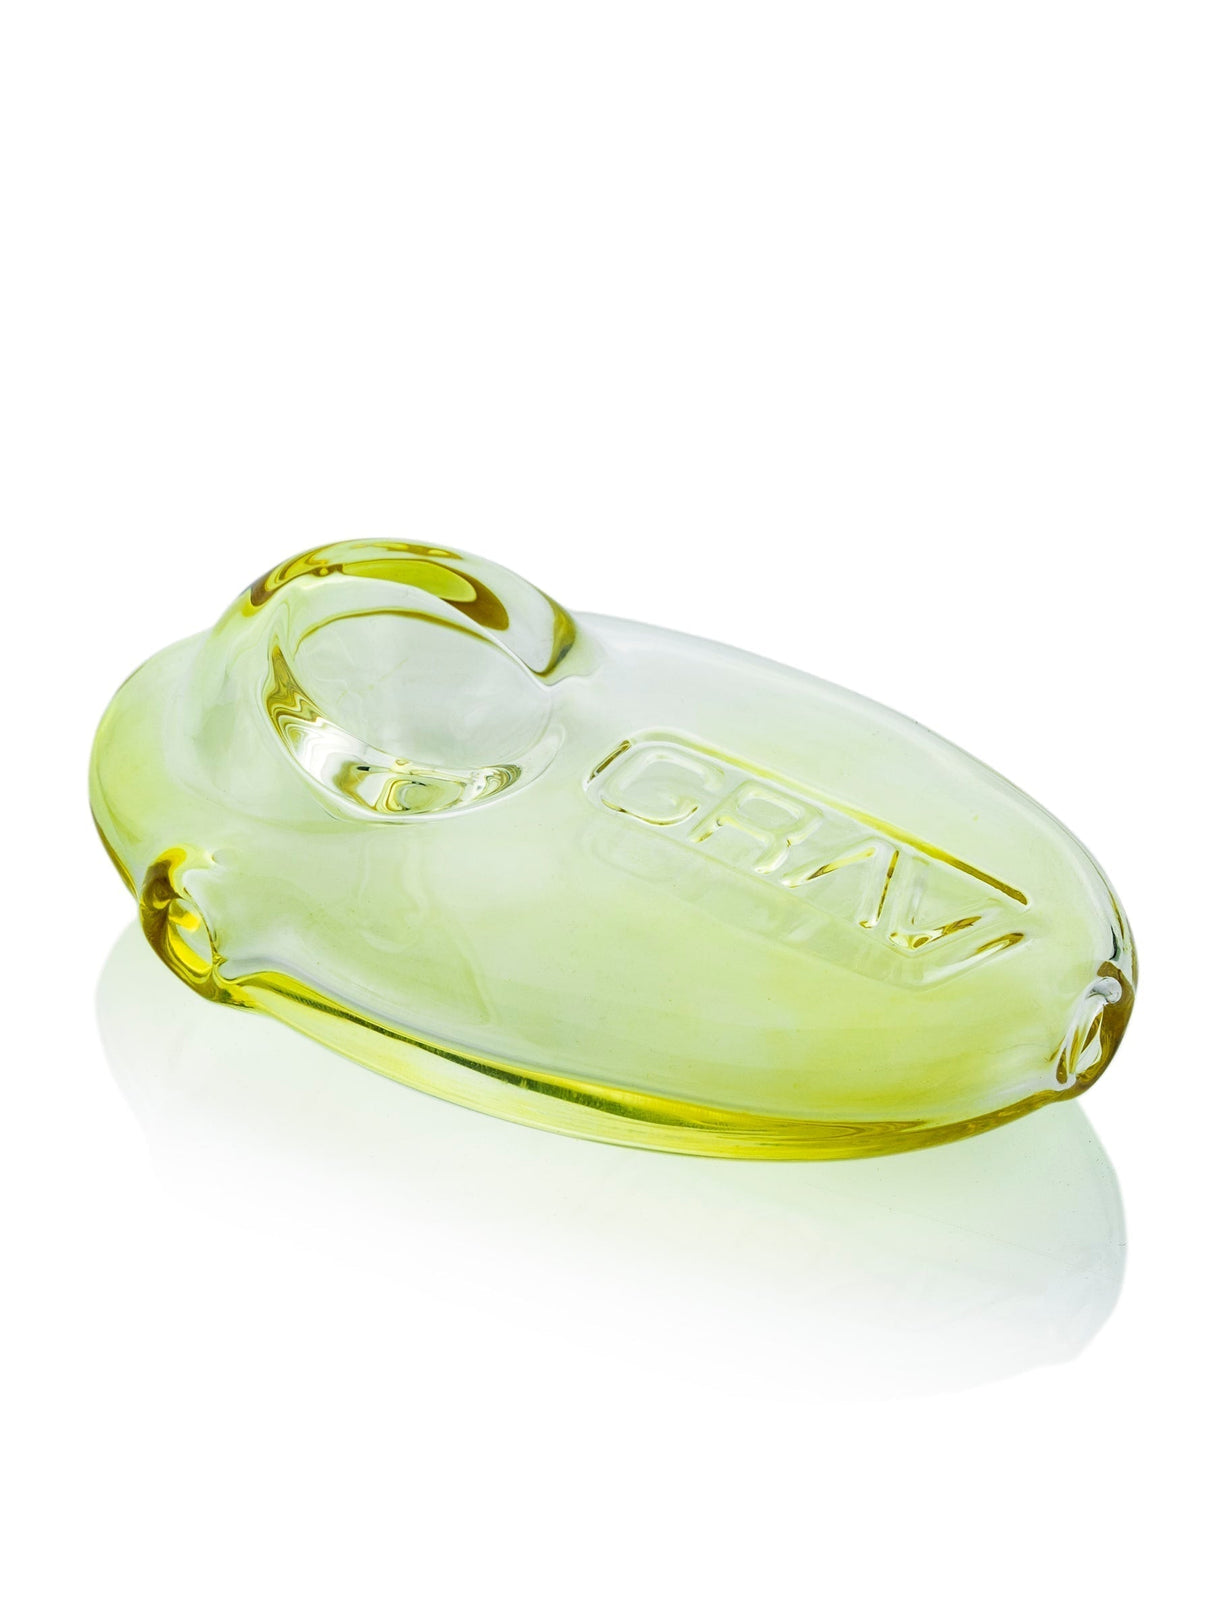 GRAV Pebble Spoon Hand Pipe in Amber, Compact and Ergonomic Design, Borosilicate Glass